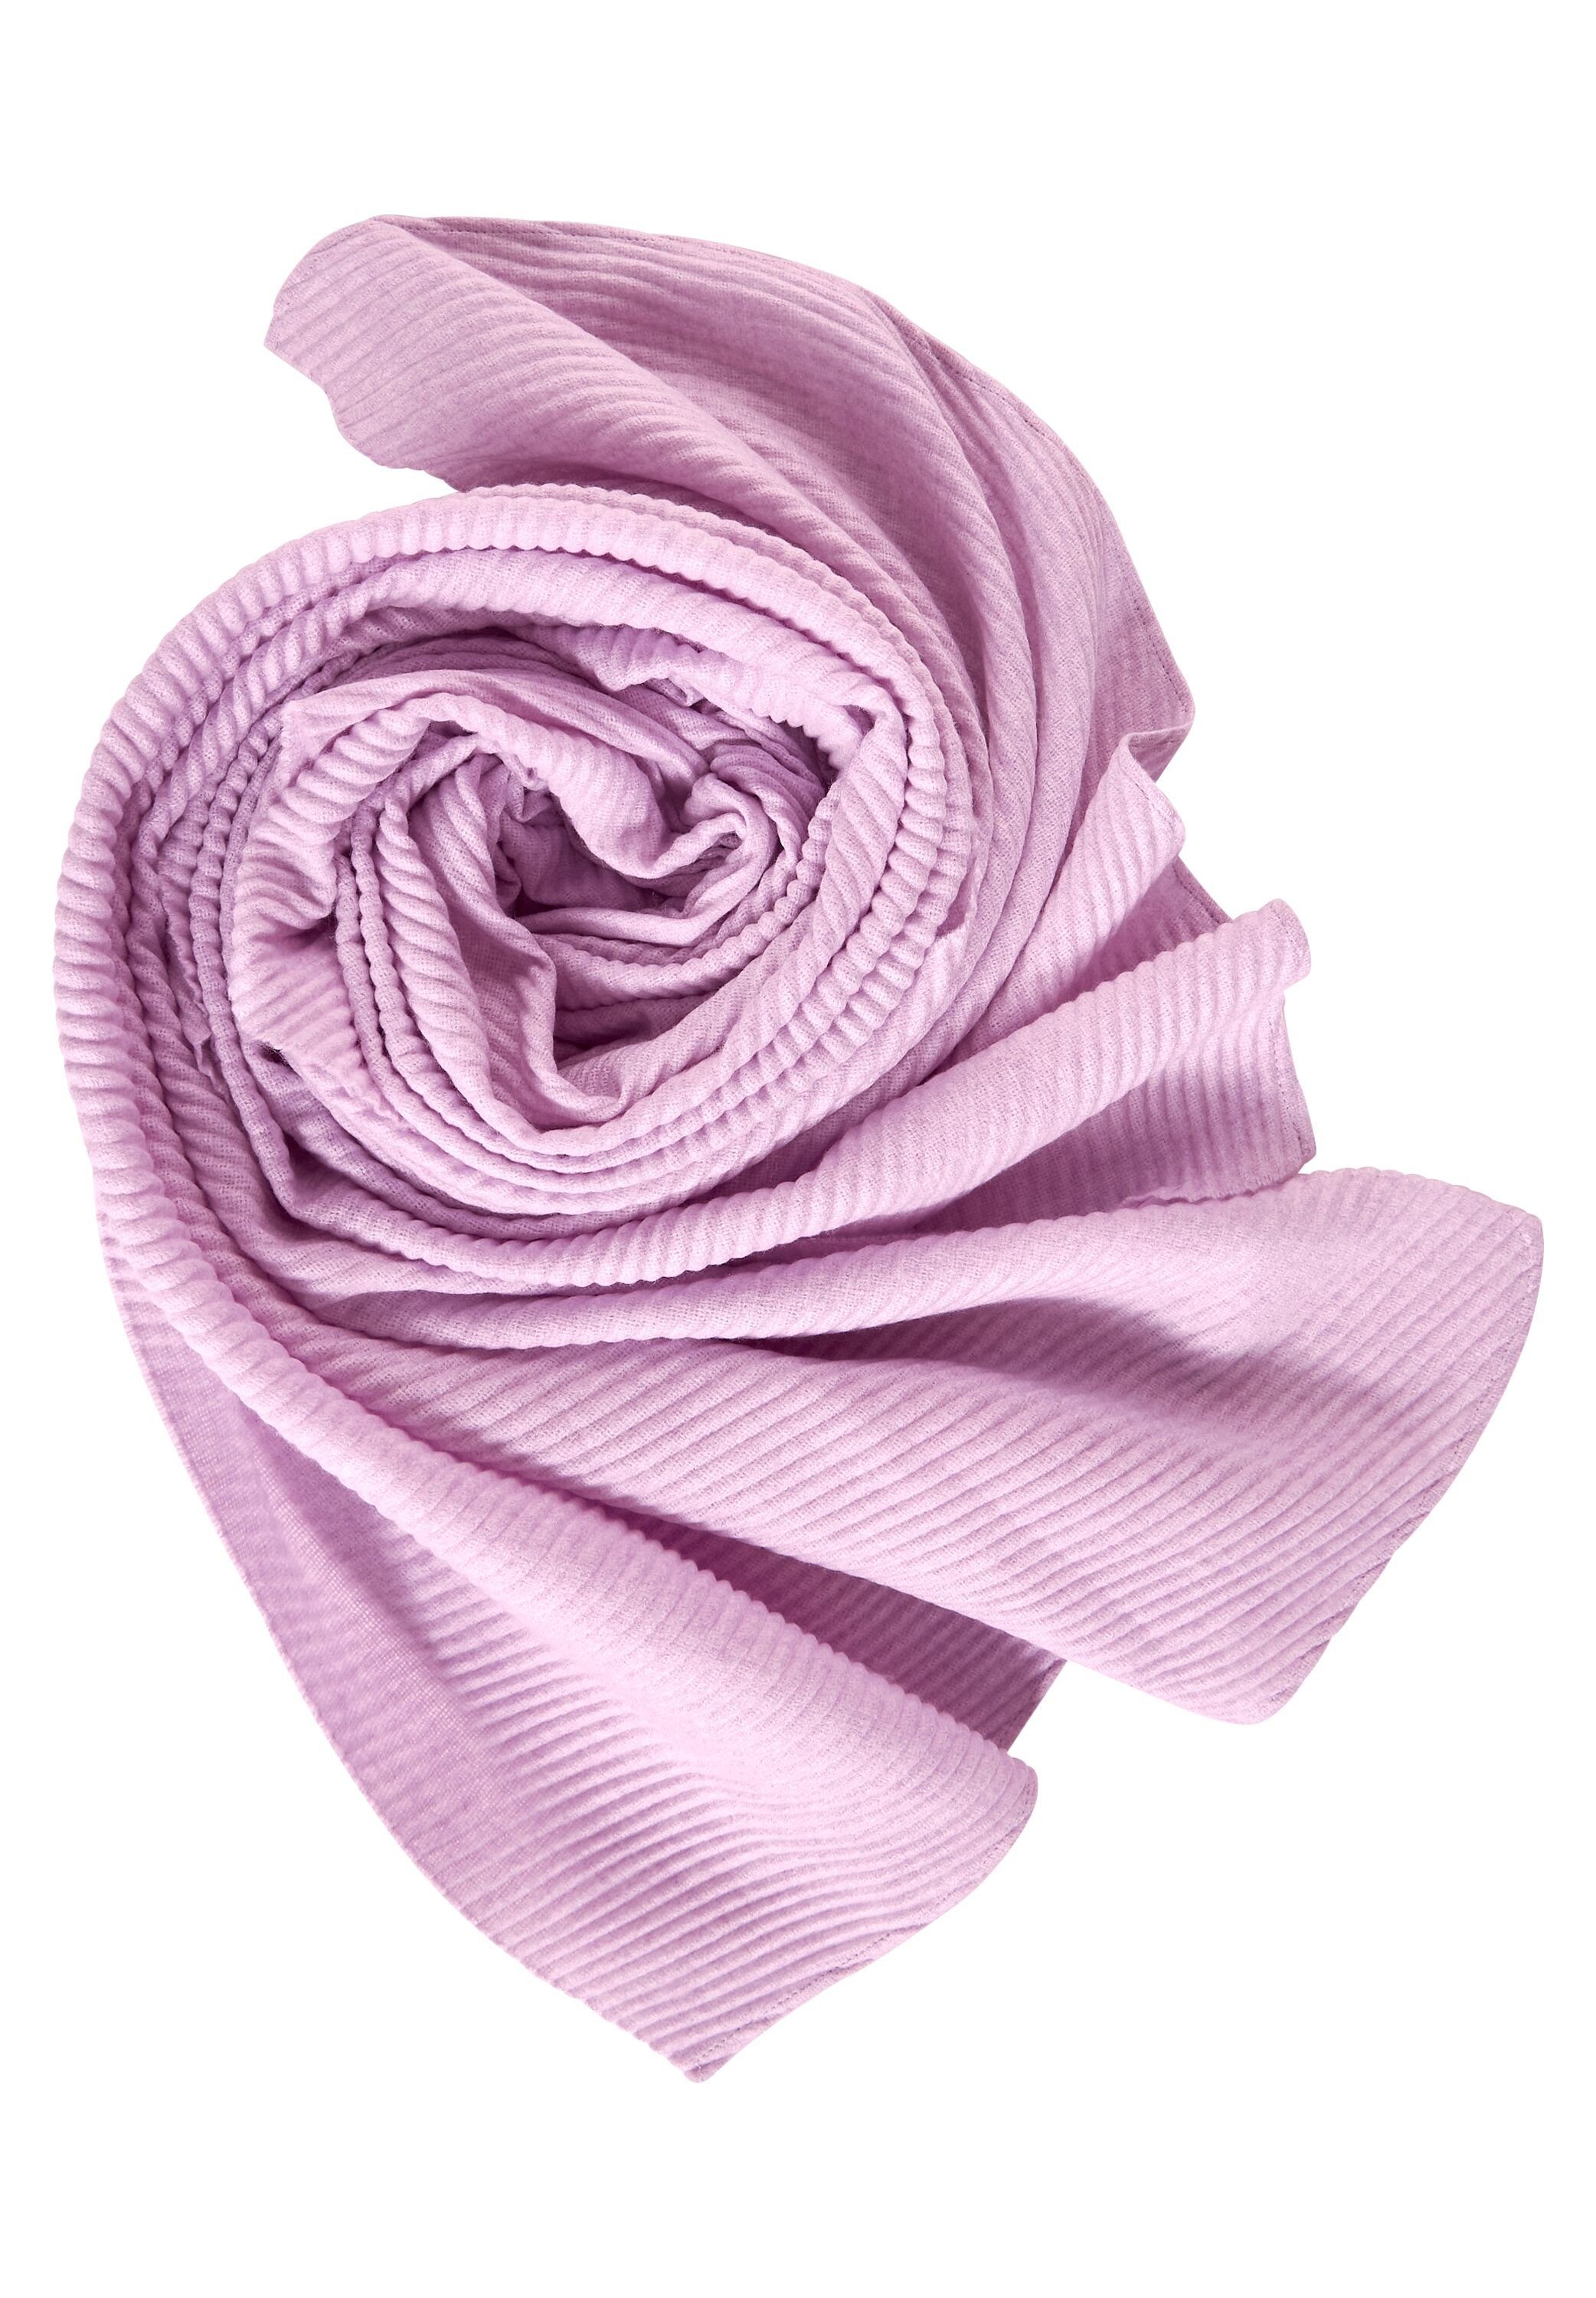 Materialmix soft softem melange aus ONE Schal, STREET rose